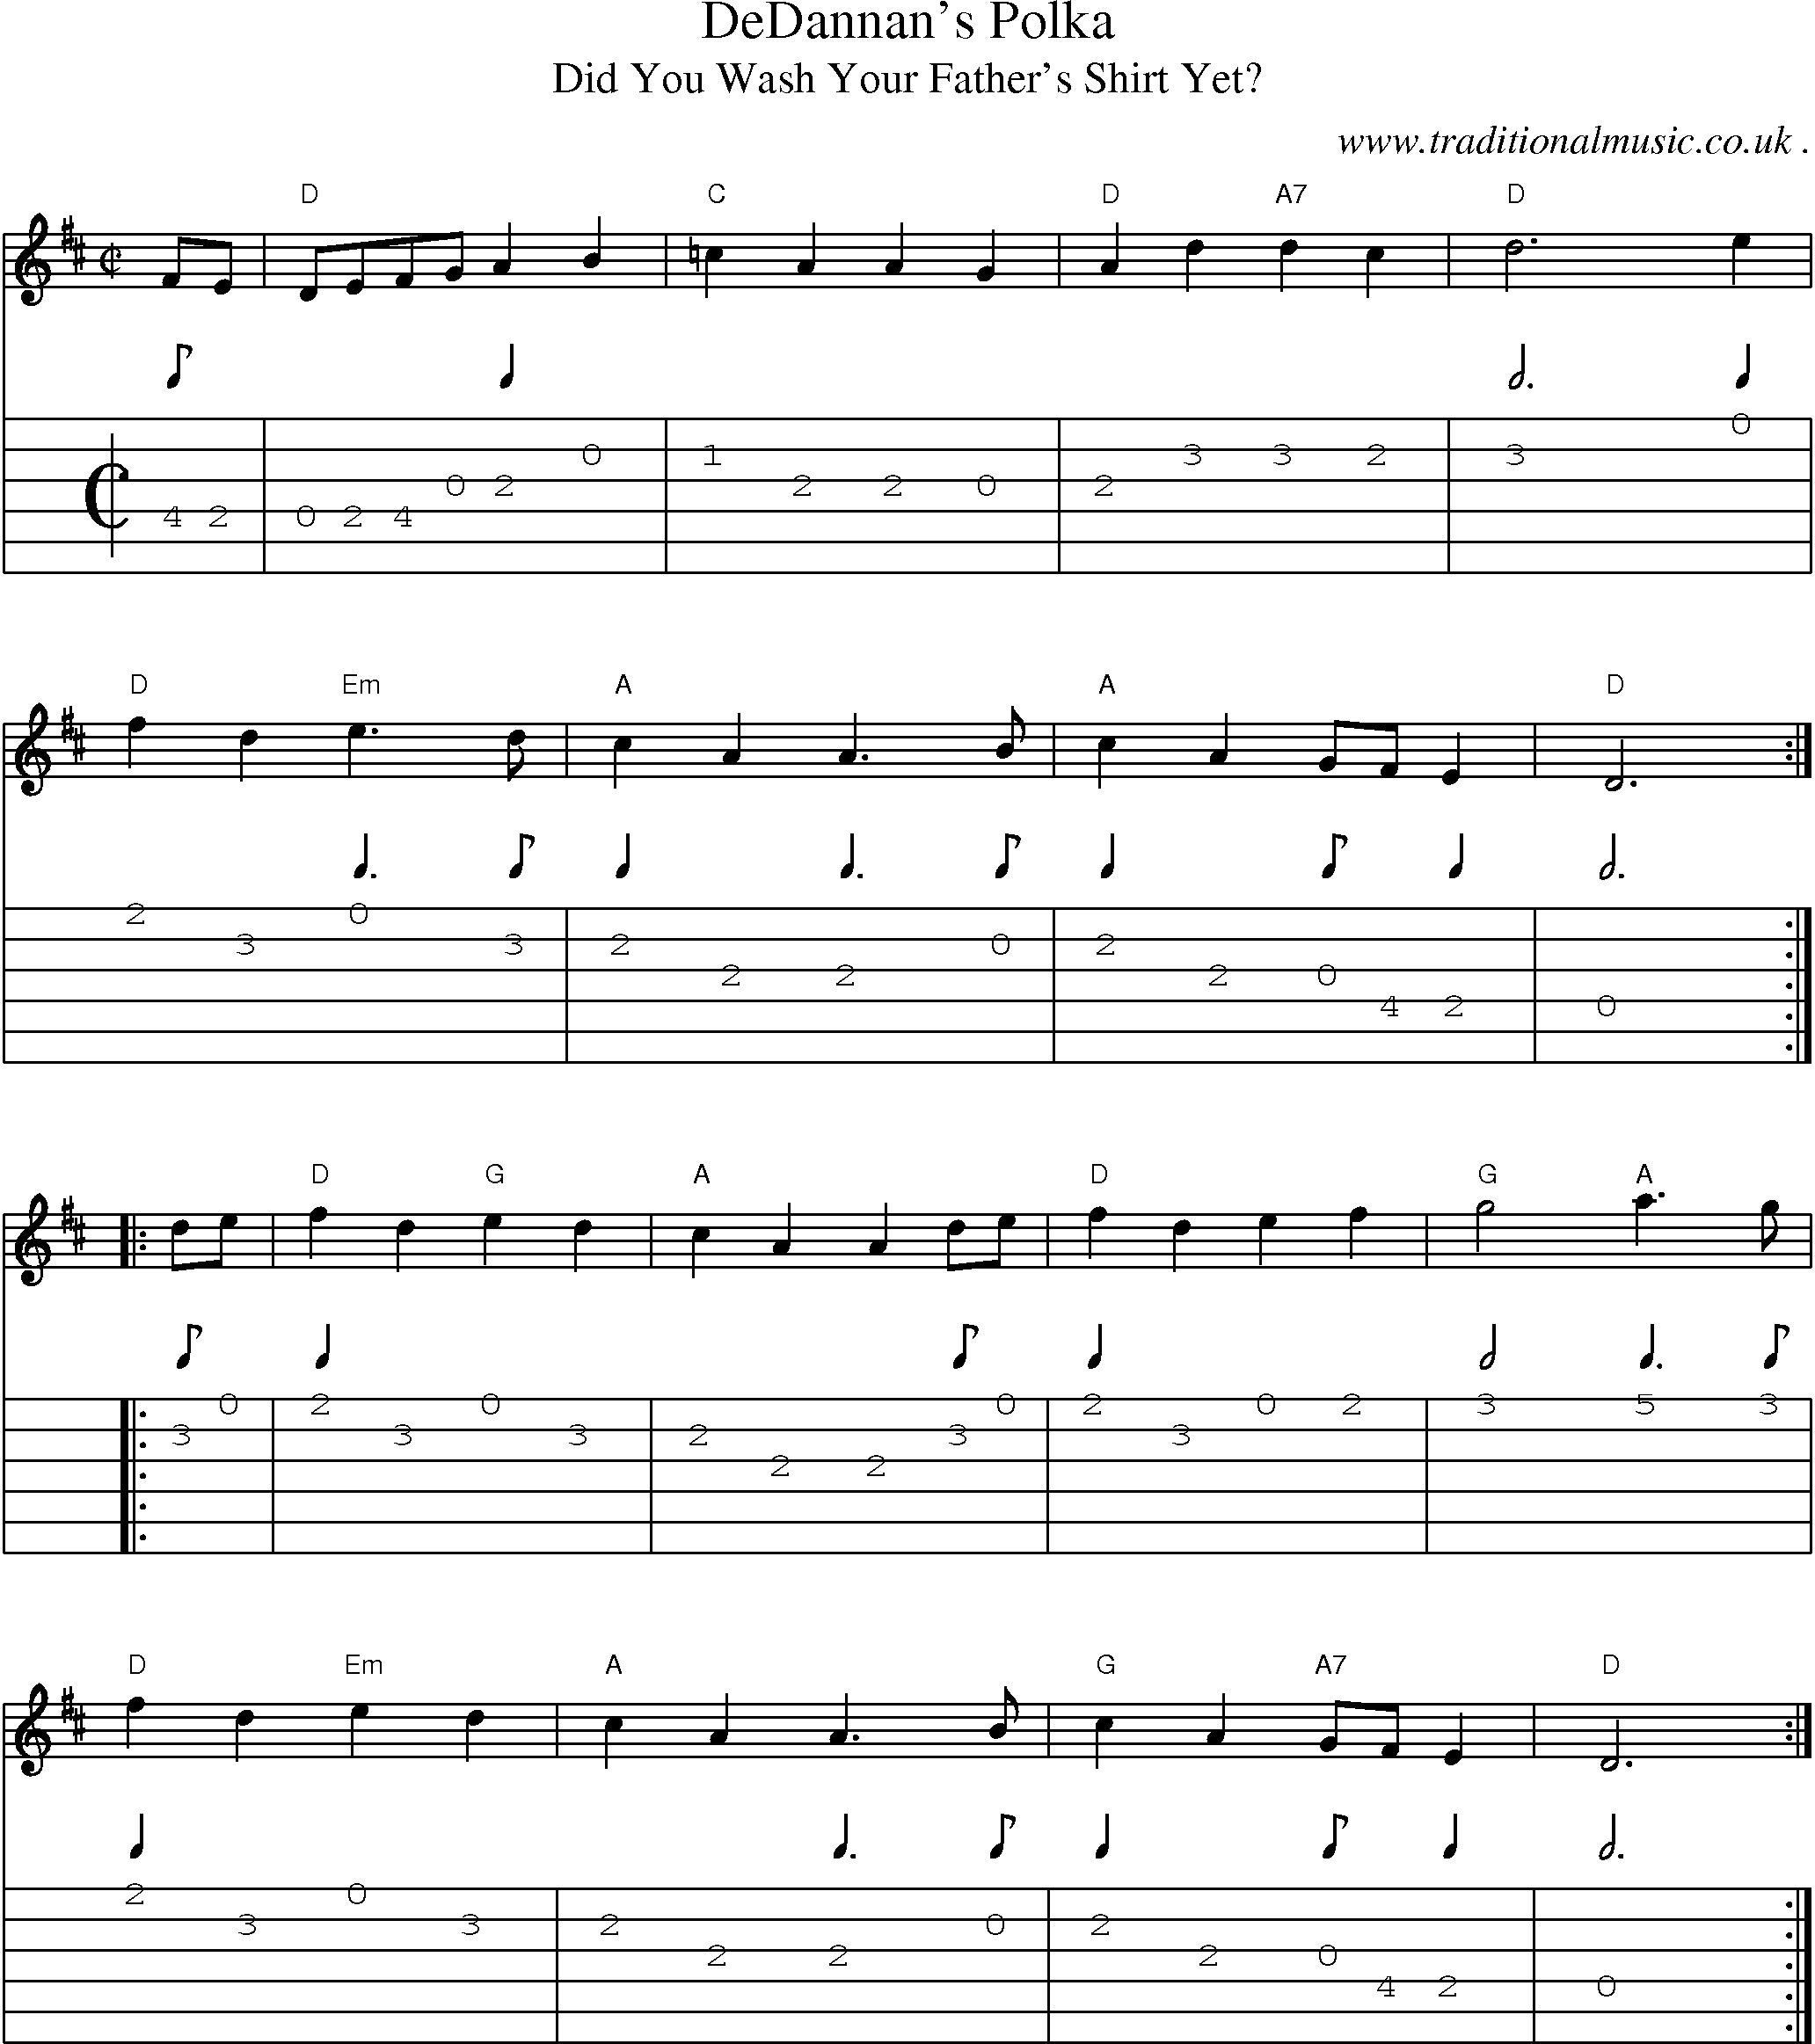 Music Score and Guitar Tabs for Dedannans Polka